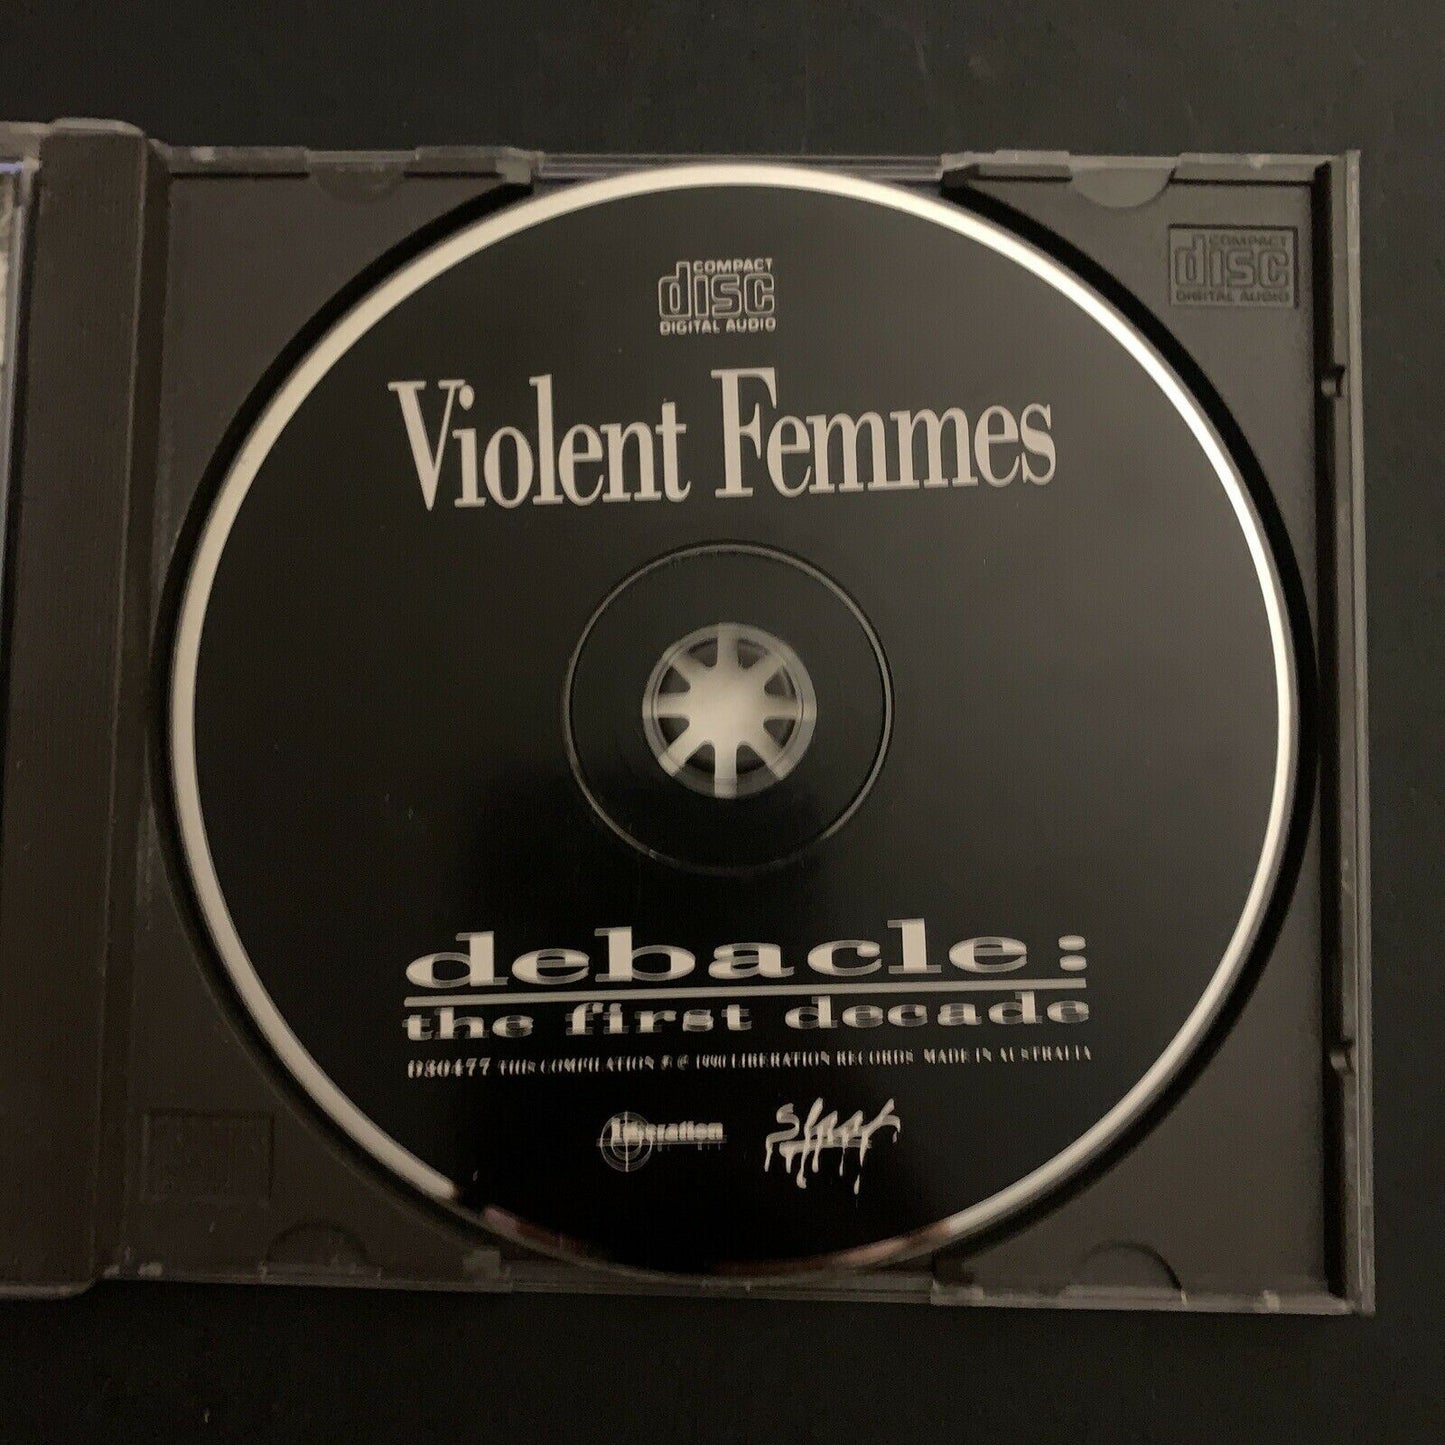 Violent Femmes - Debacle: The First Decade (CD) Album